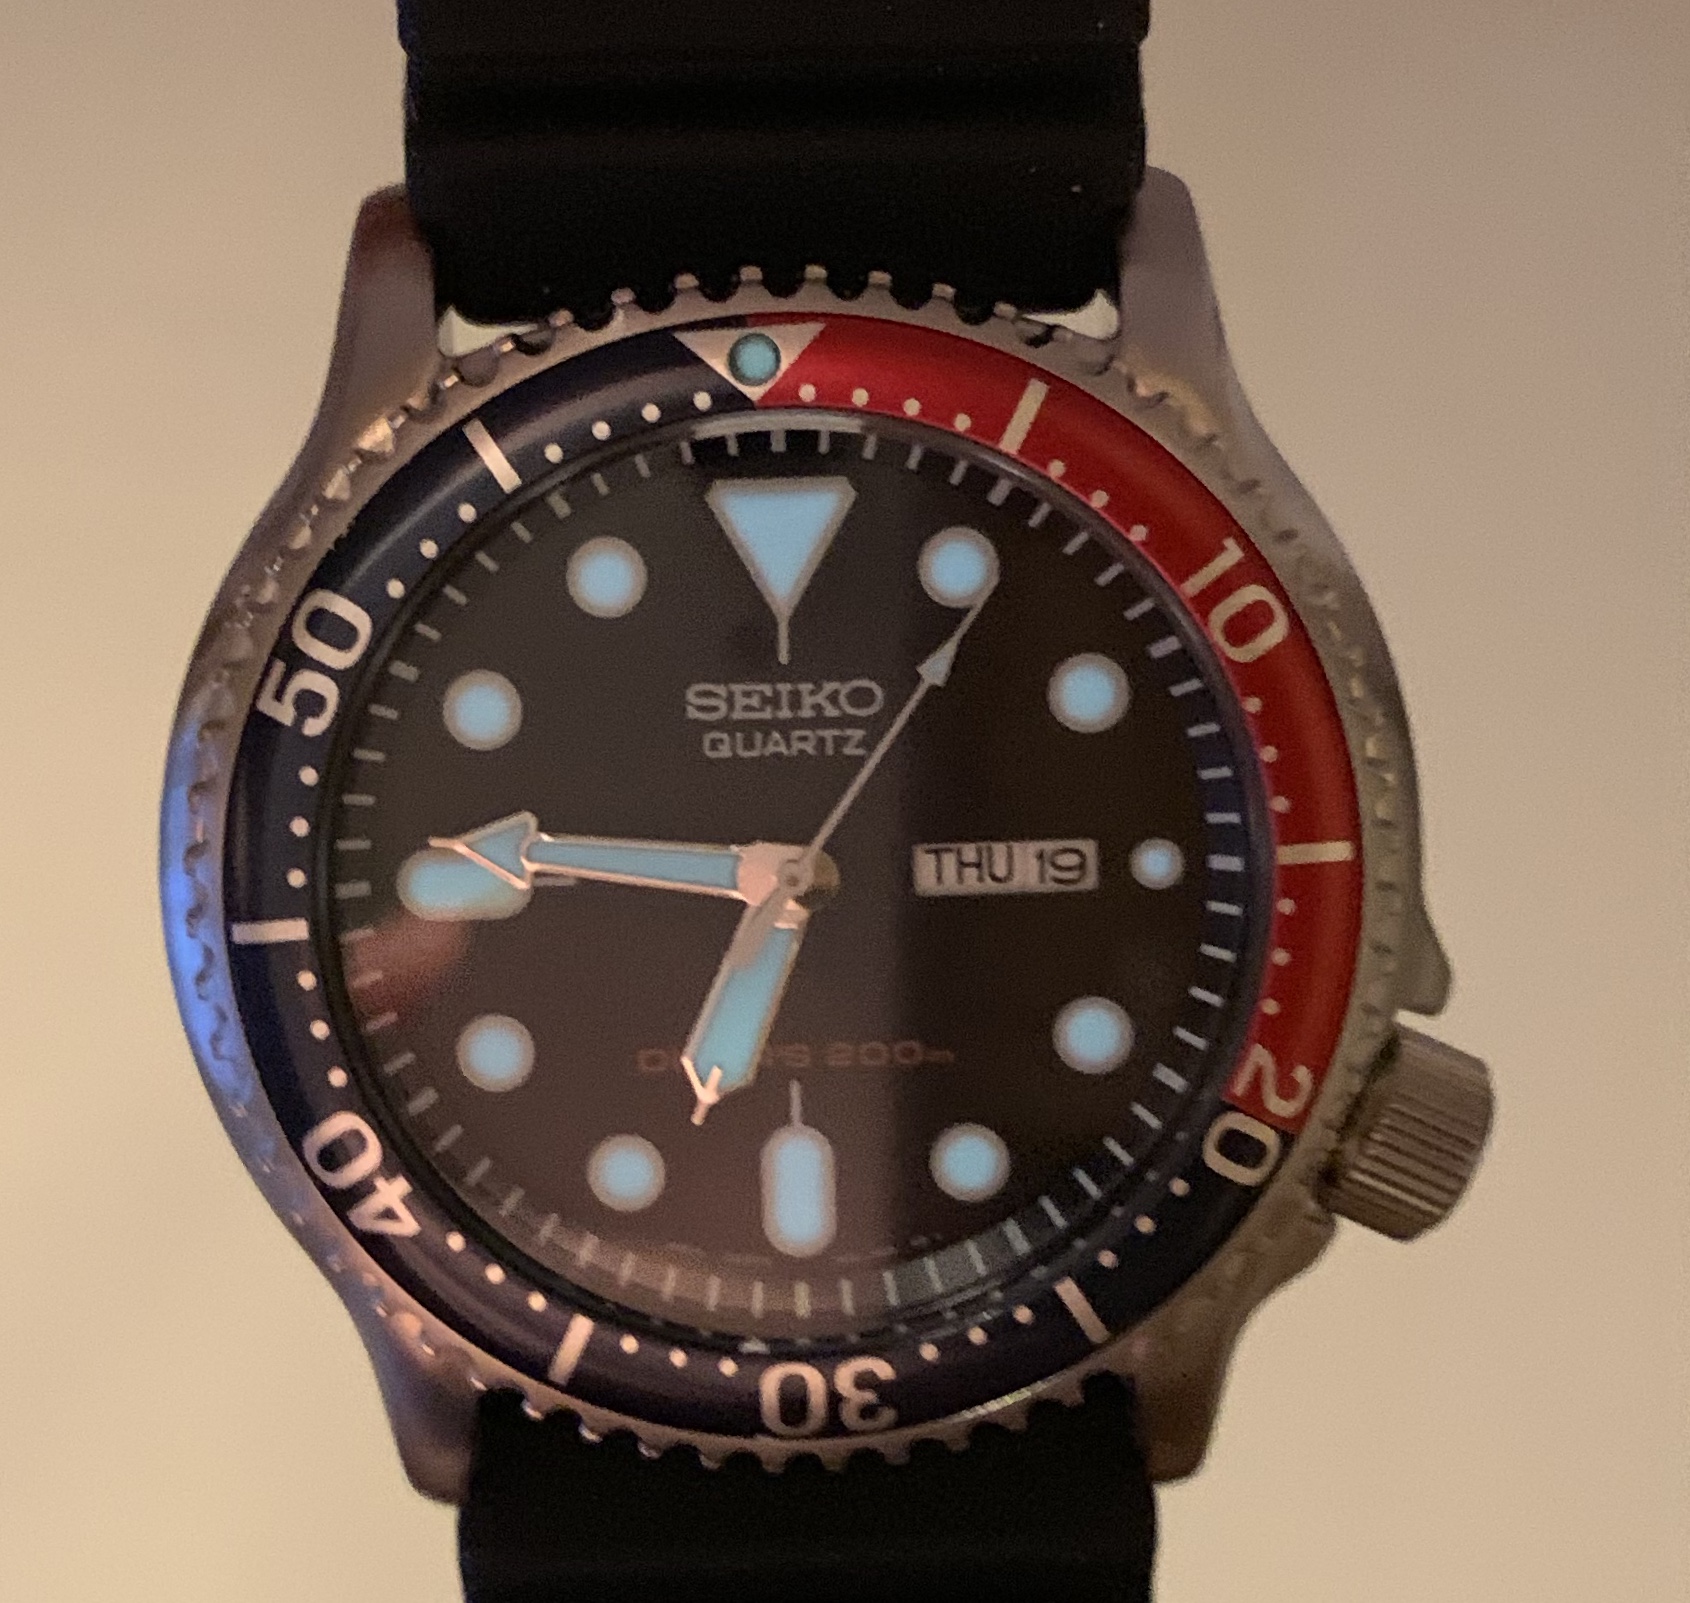 FS: NOS Seiko SHC033 Pepsi Quartz Diver (7N36-7A08) | WatchCharts